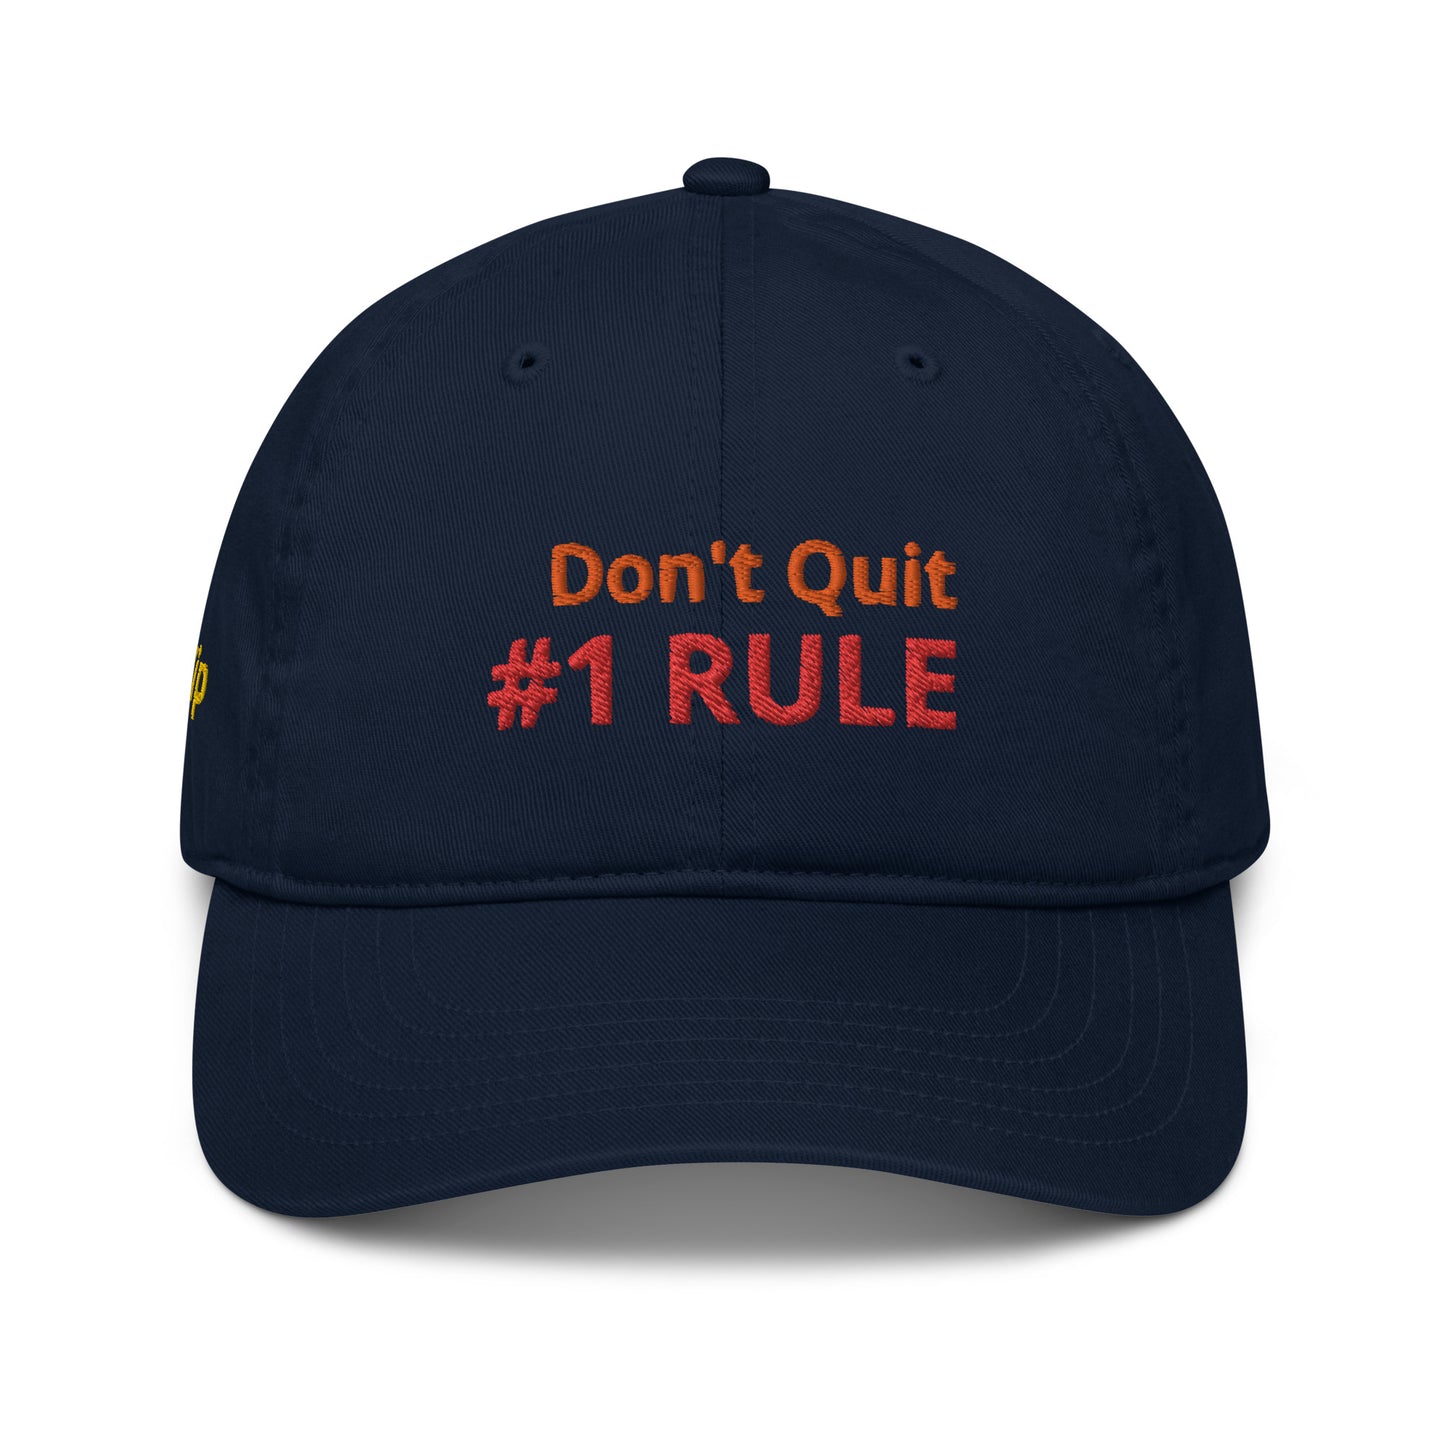 Don't quite #1 rule baseball hat